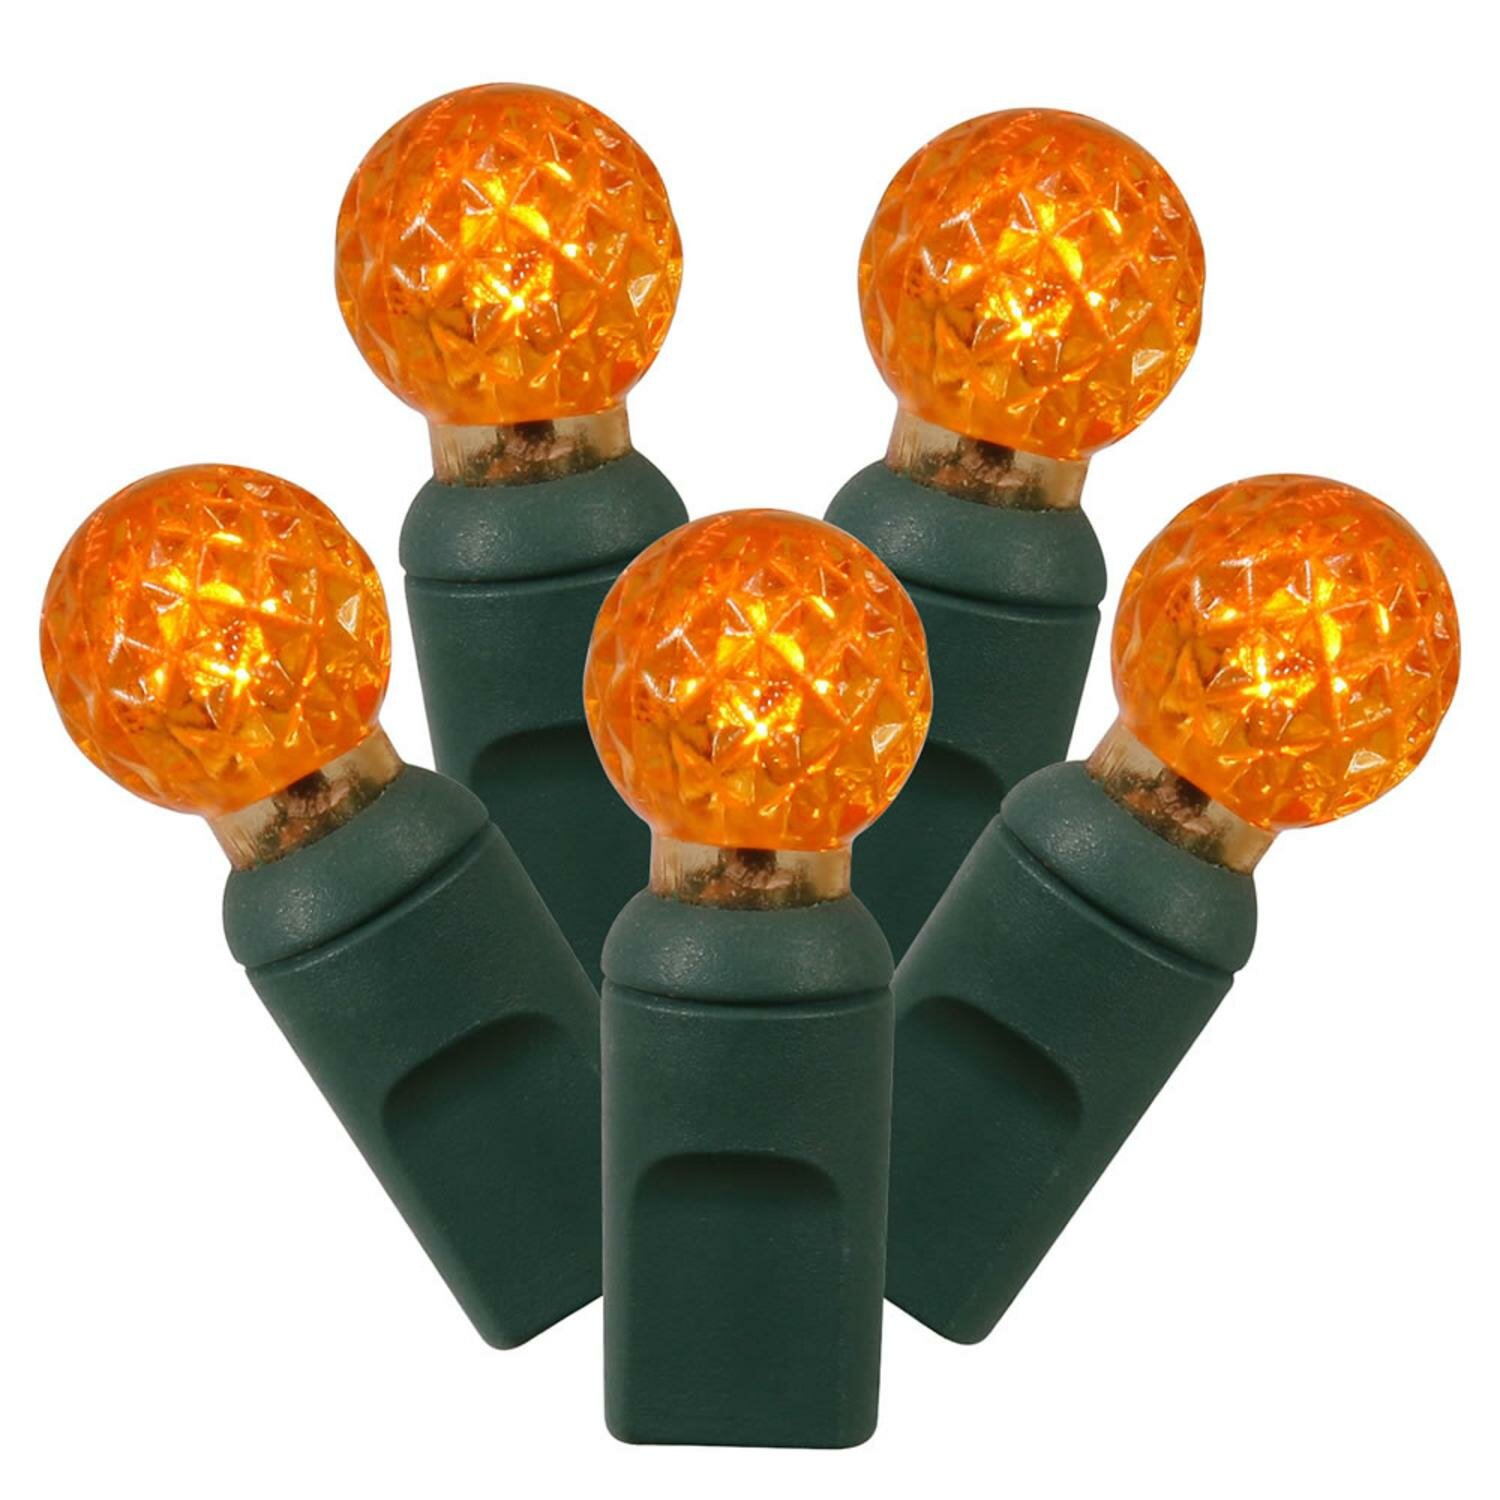 The Holiday Aisle® LED Globe Holiday Lighting & Reviews | Wayfair